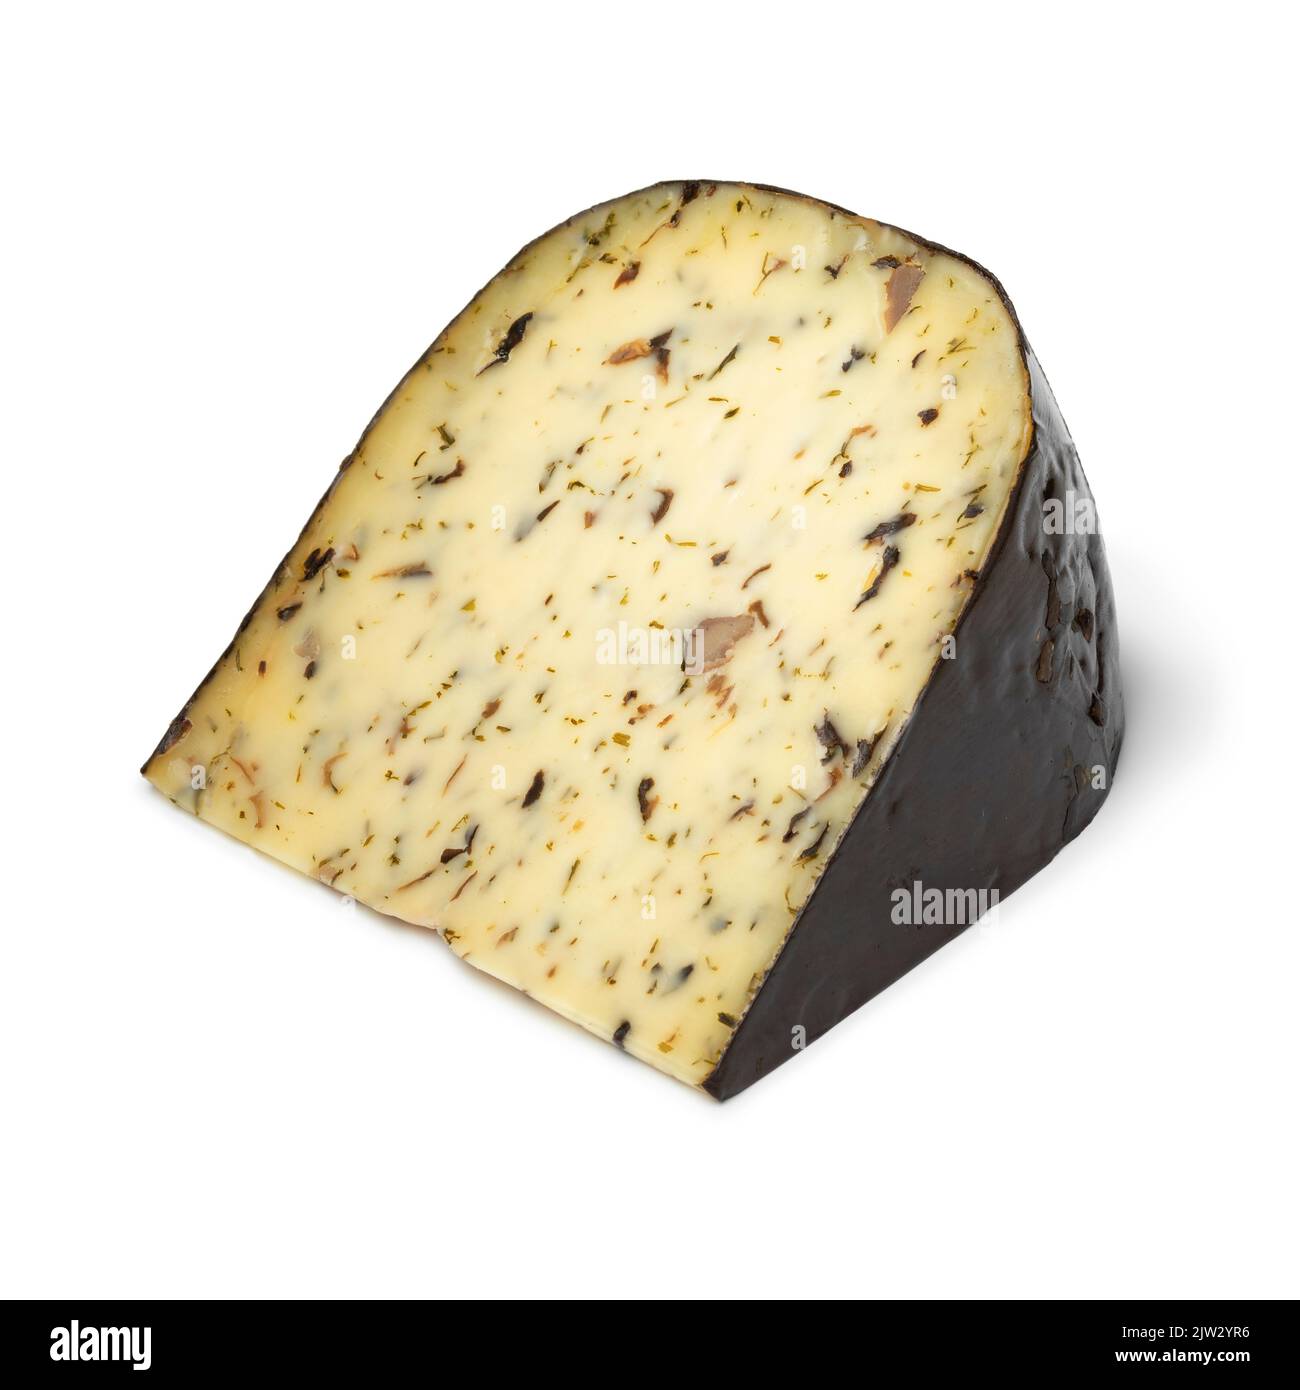 Pieza de queso Gouda con setas silvestres aisladas sobre fondo blanco de cerca Foto de stock